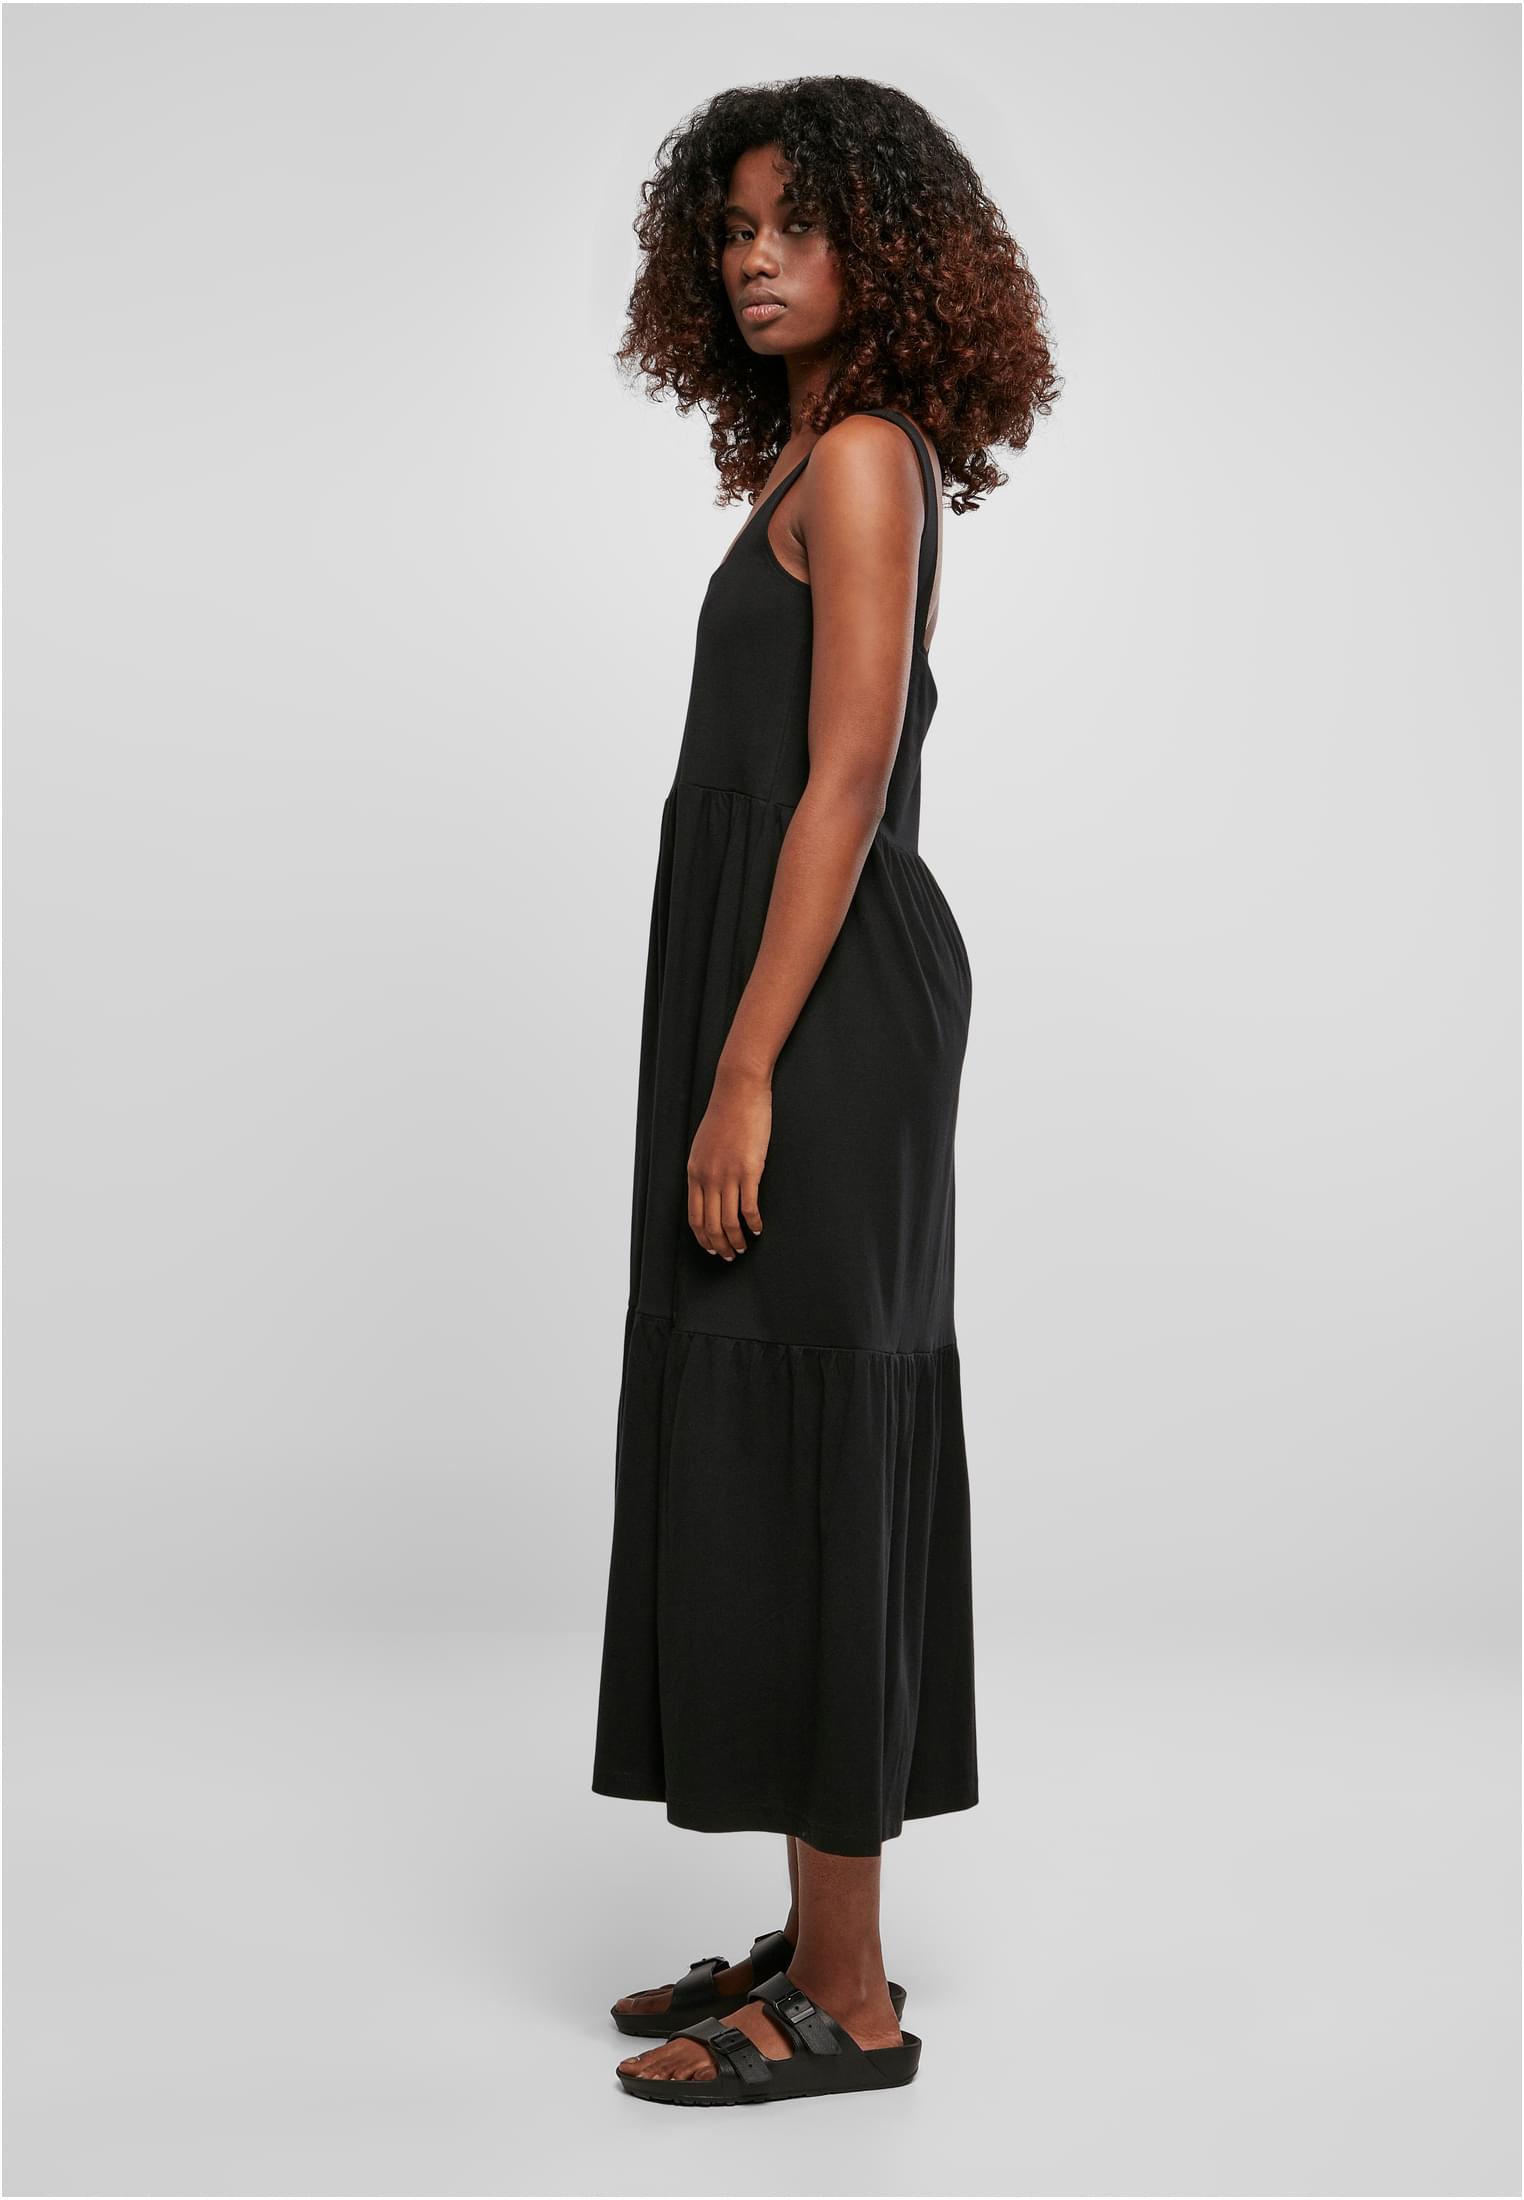 Frauen Ladies 7/8 Length Valance Summer Dress in Farbe black